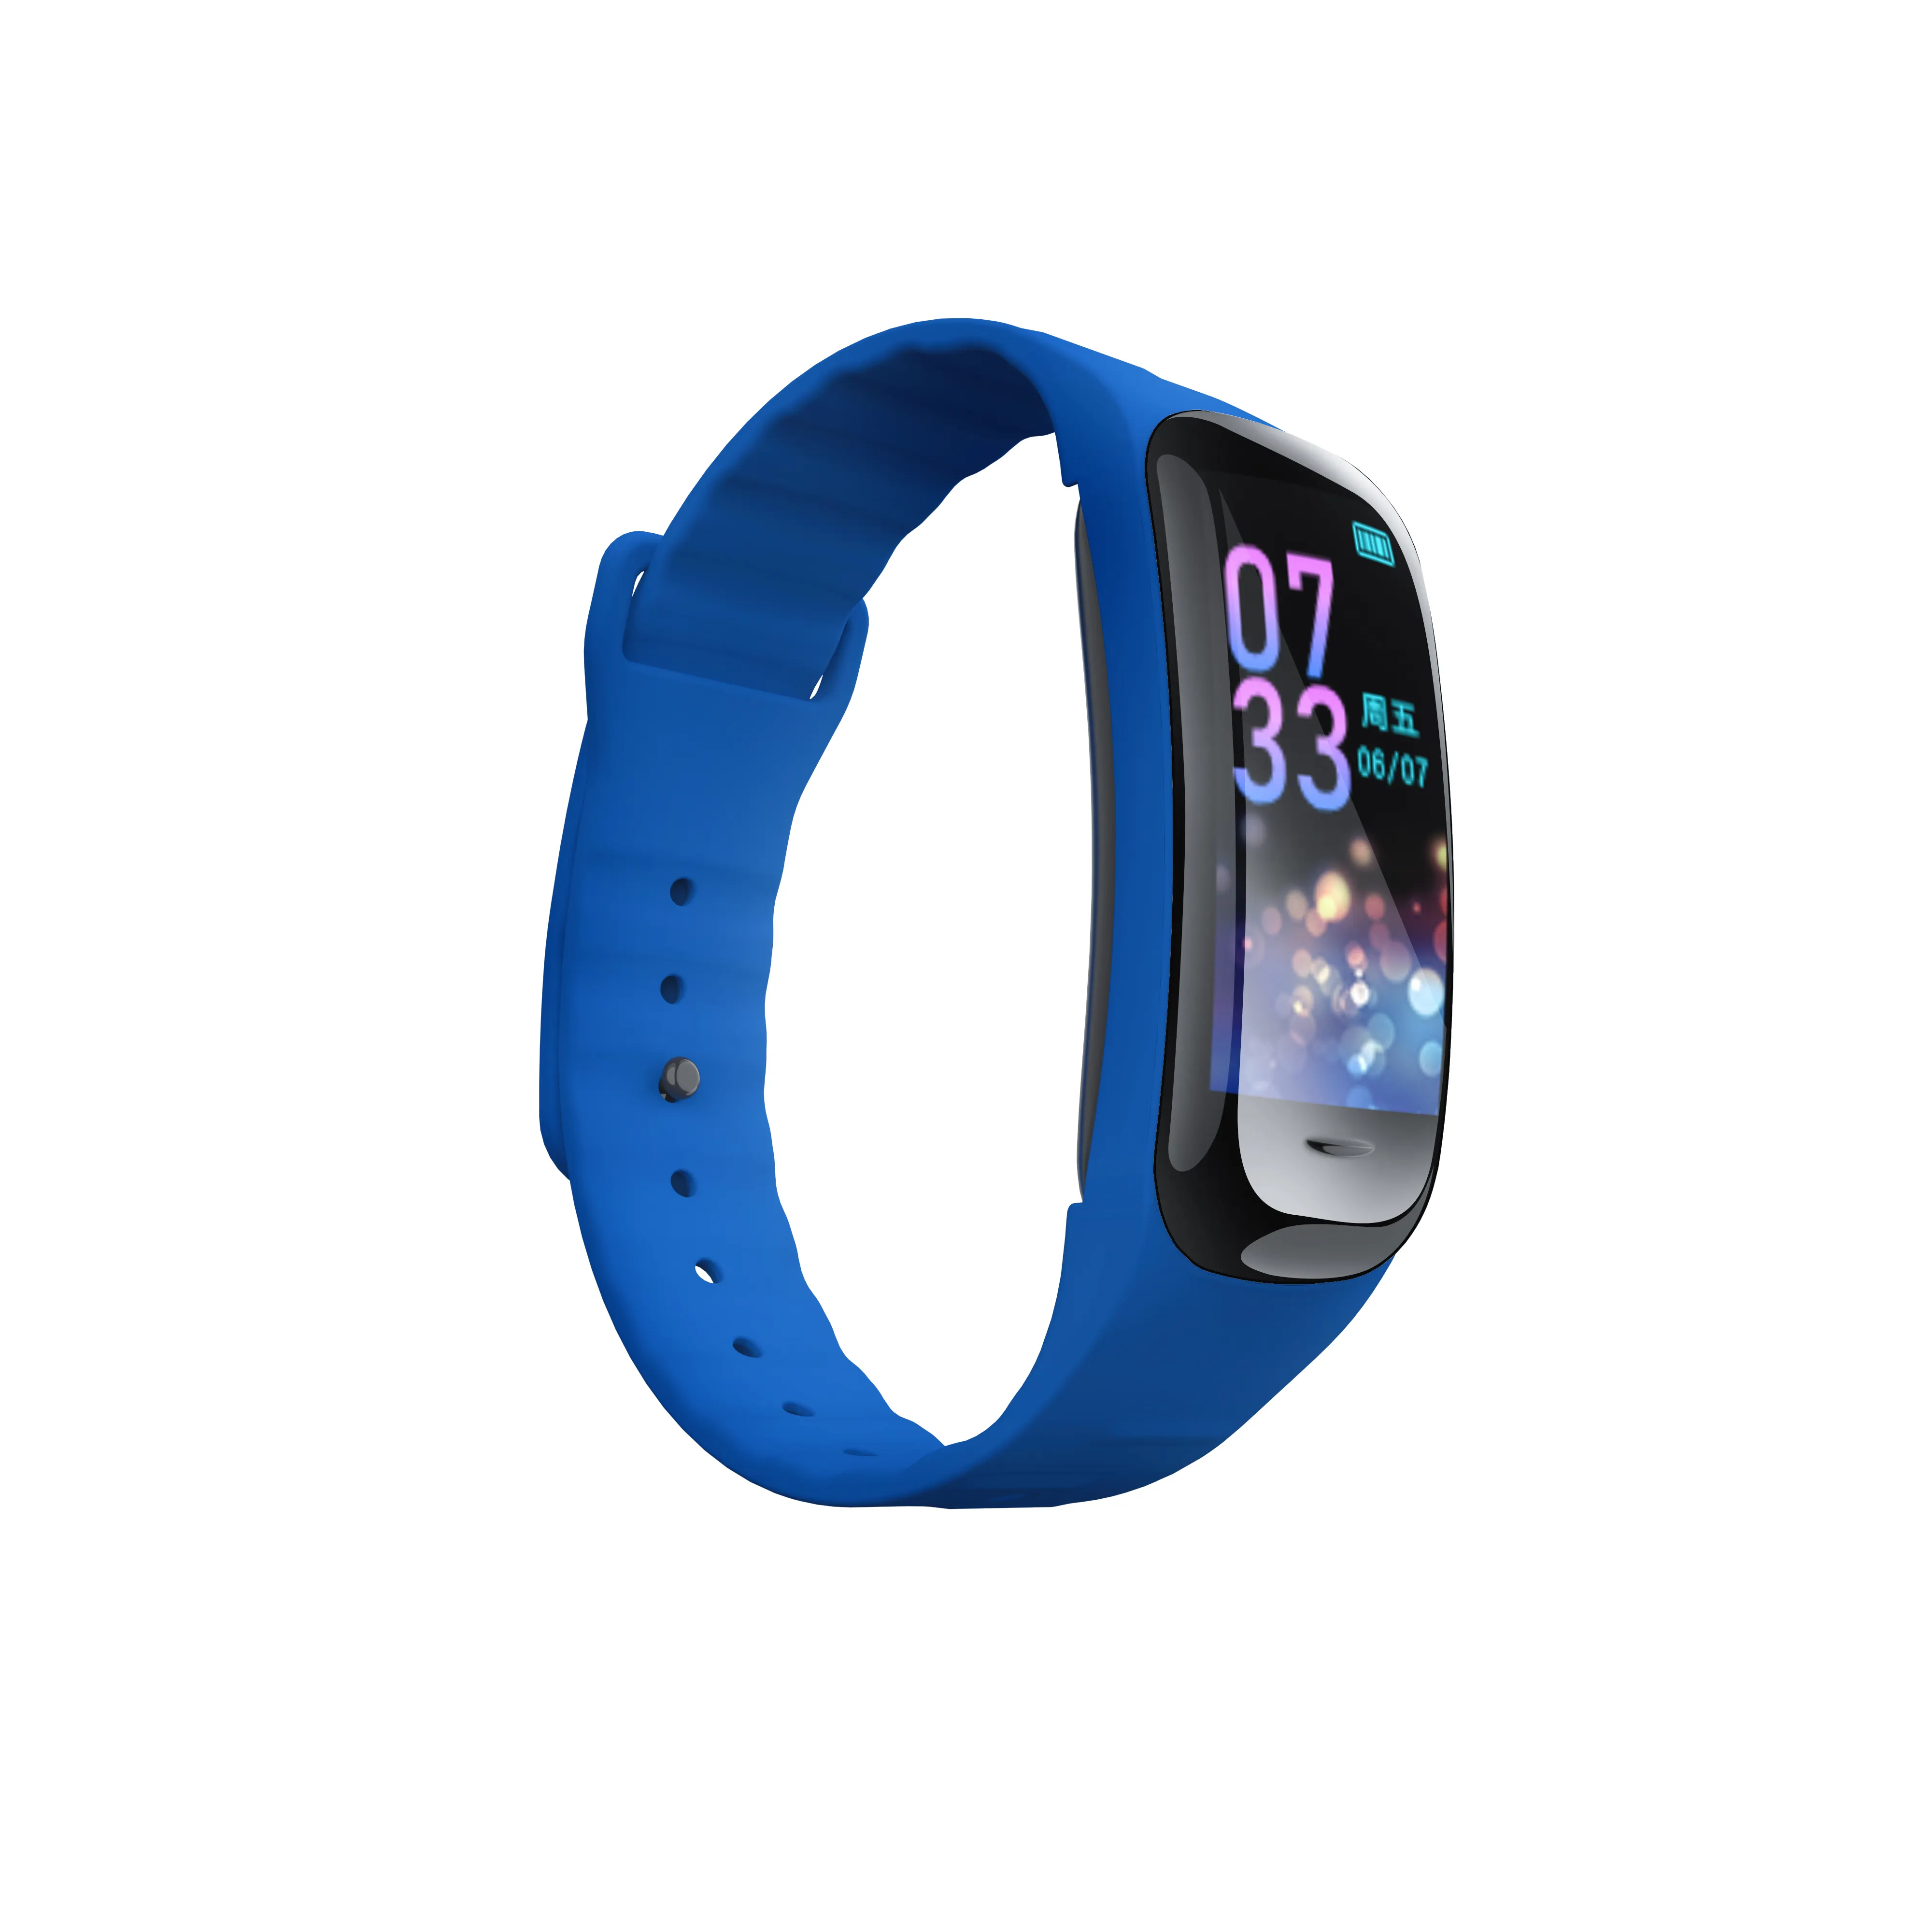 Kingstar นาฬิกาอัจฉริยะสายรัดข้อมือเพื่อสุขภาพวัดความดันโลหิตอัตราการเต้นของหัวใจเครื่องนับก้าว Android สายรัดข้อมืออัจฉริยะสำหรับเล่นกีฬากันน้ำ